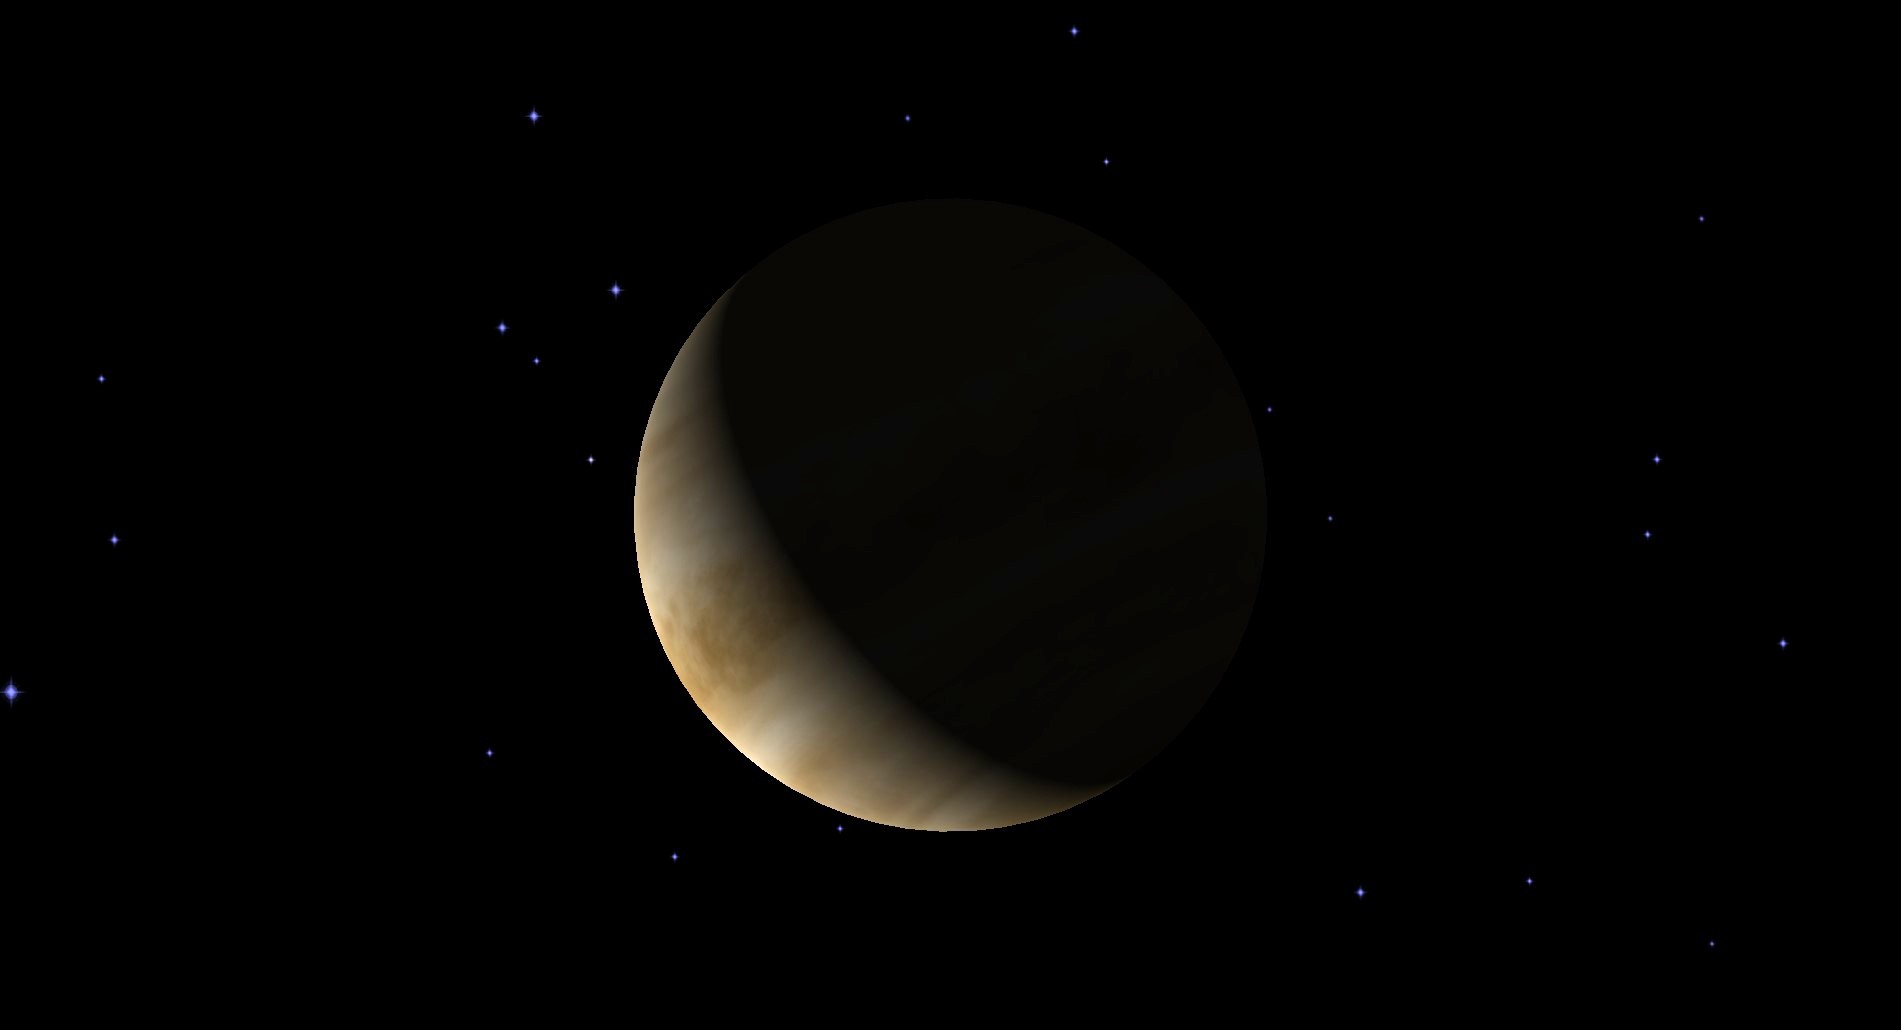 Artist's illustration showing a half-illuminated planet Venus.